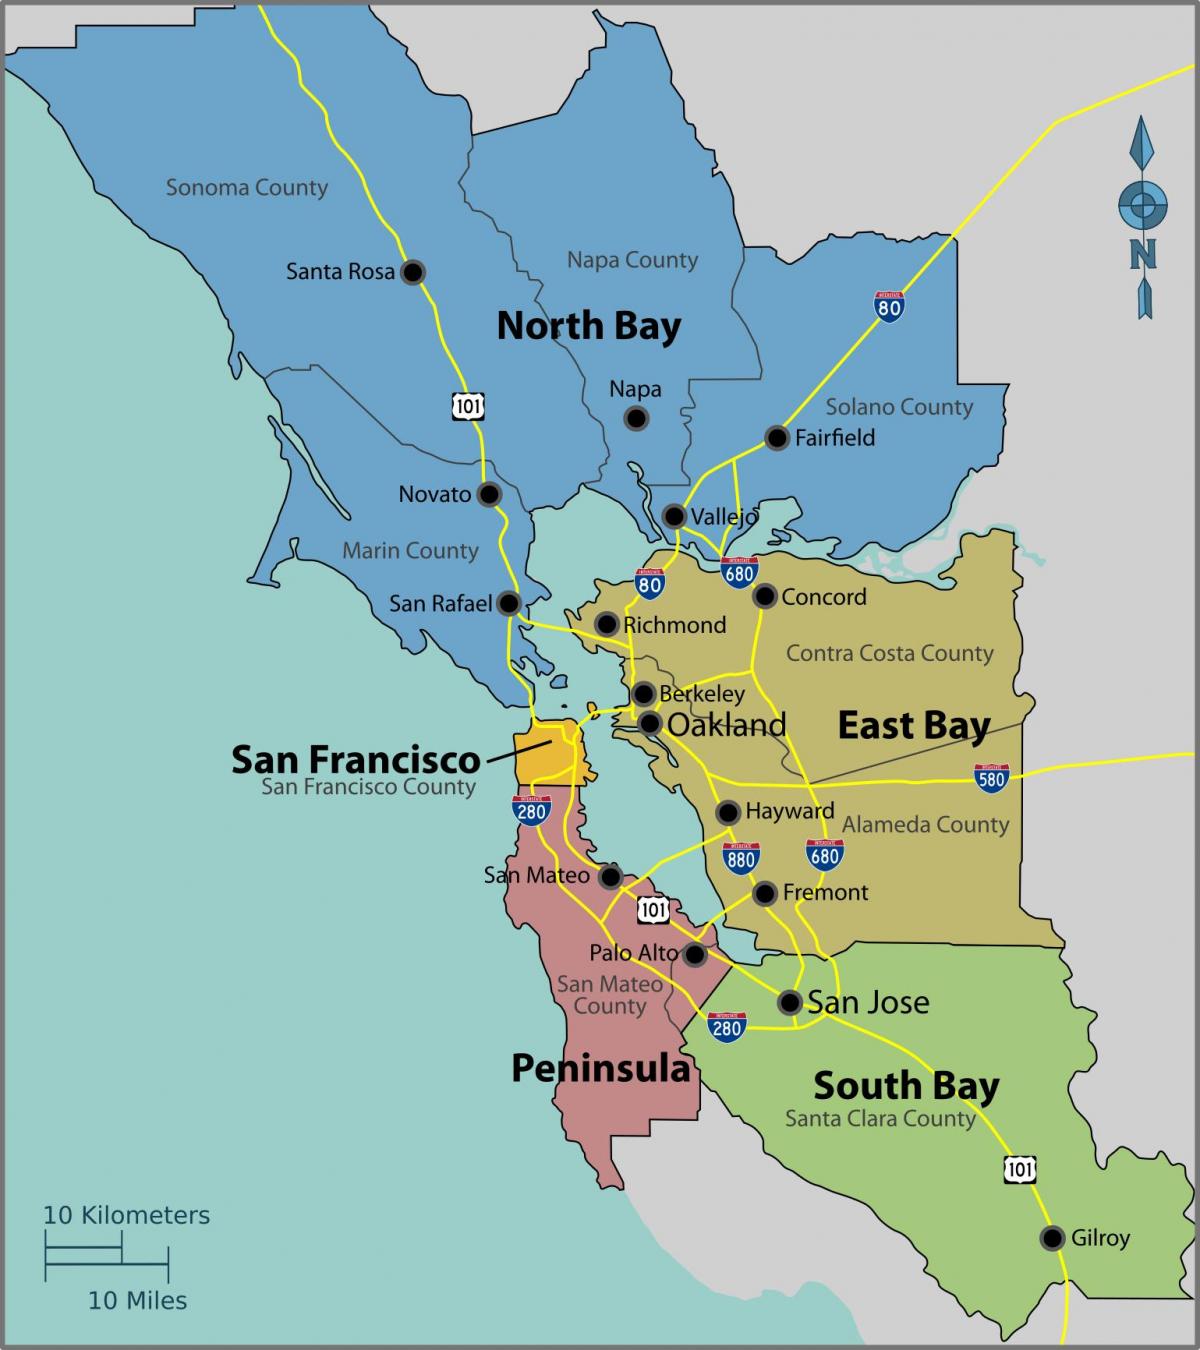 San Francisco bay kartalla